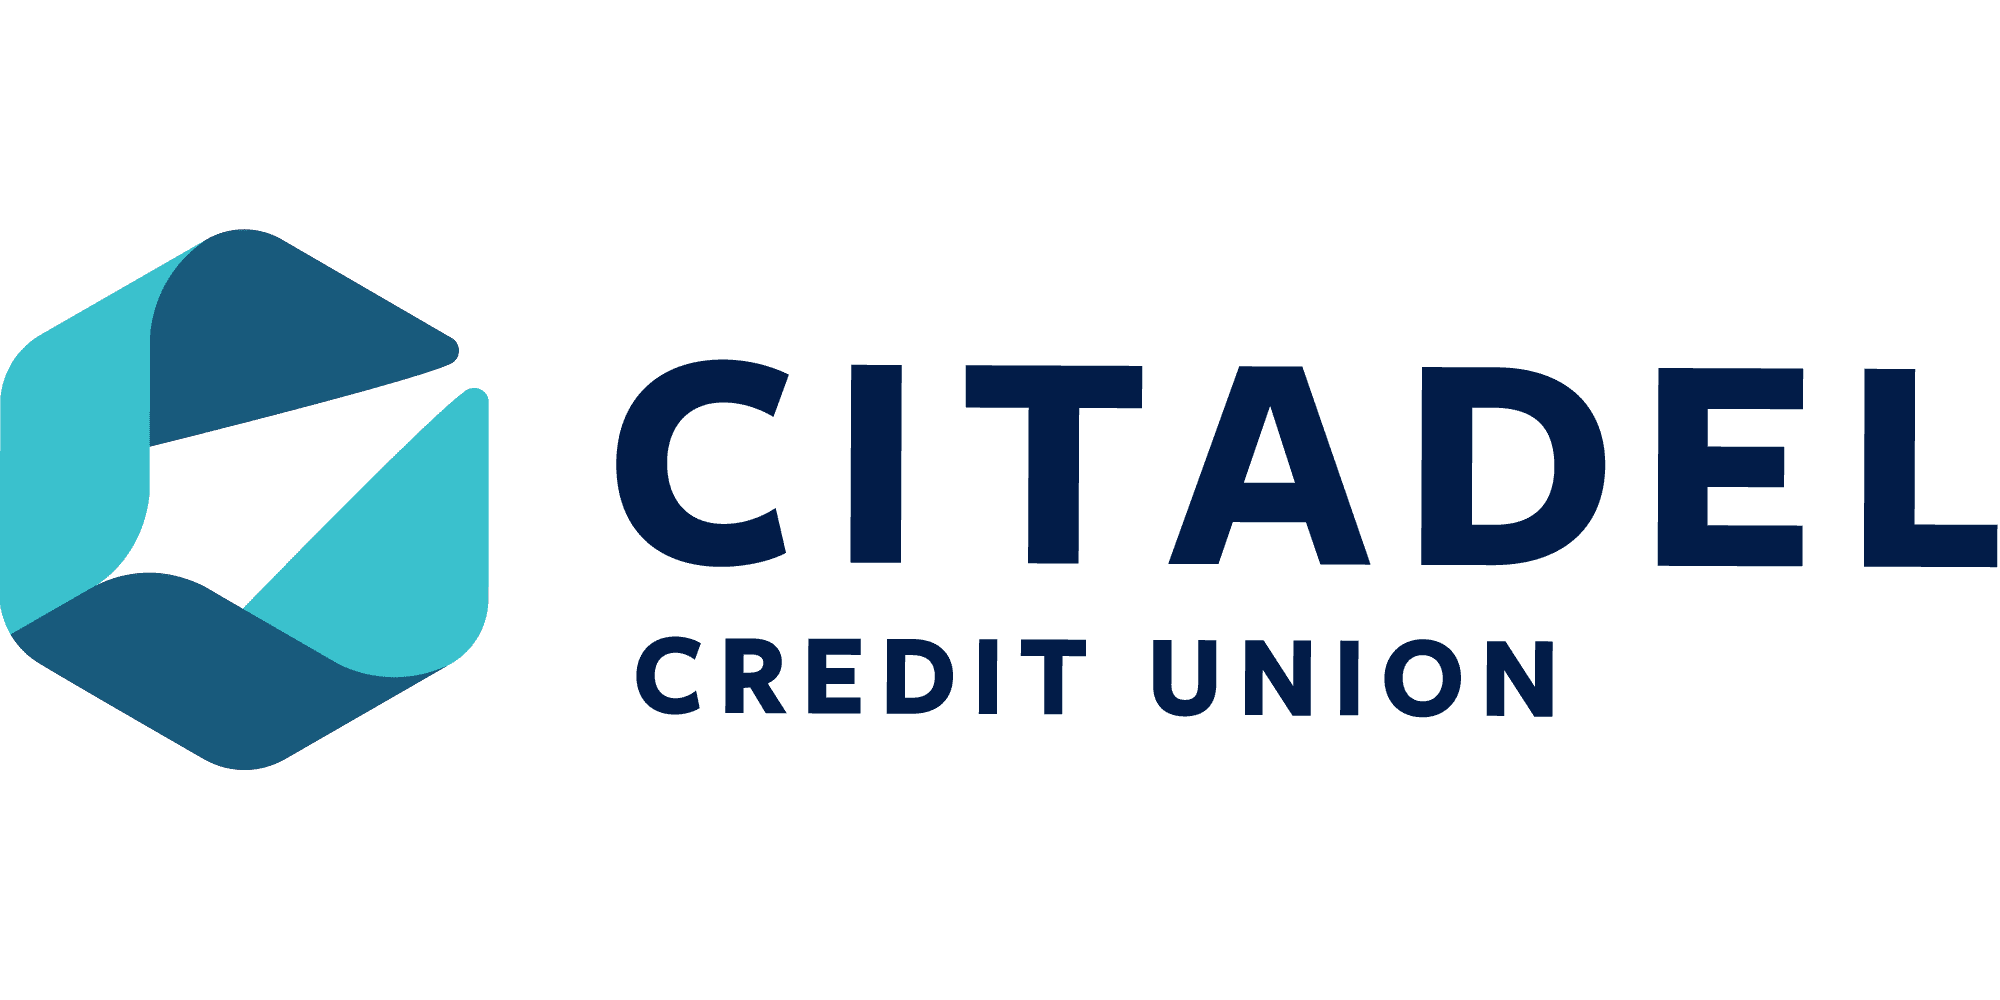 Citadel Credit Union logo